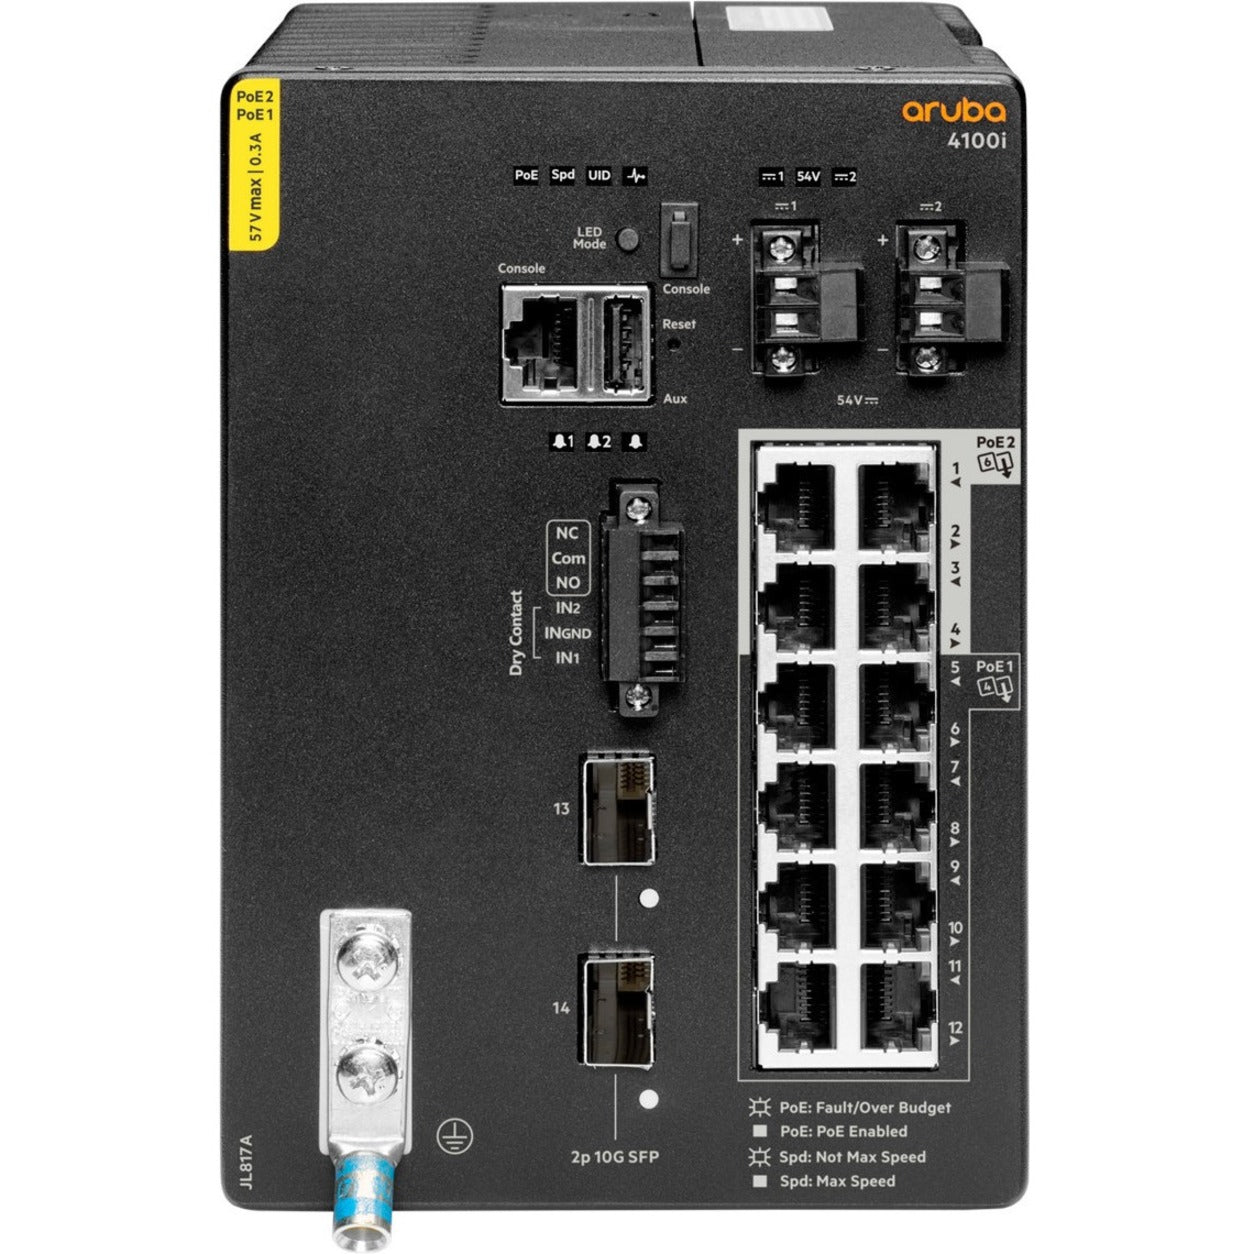 Aruba CX 4100i Ethernet Switch (JL817A)